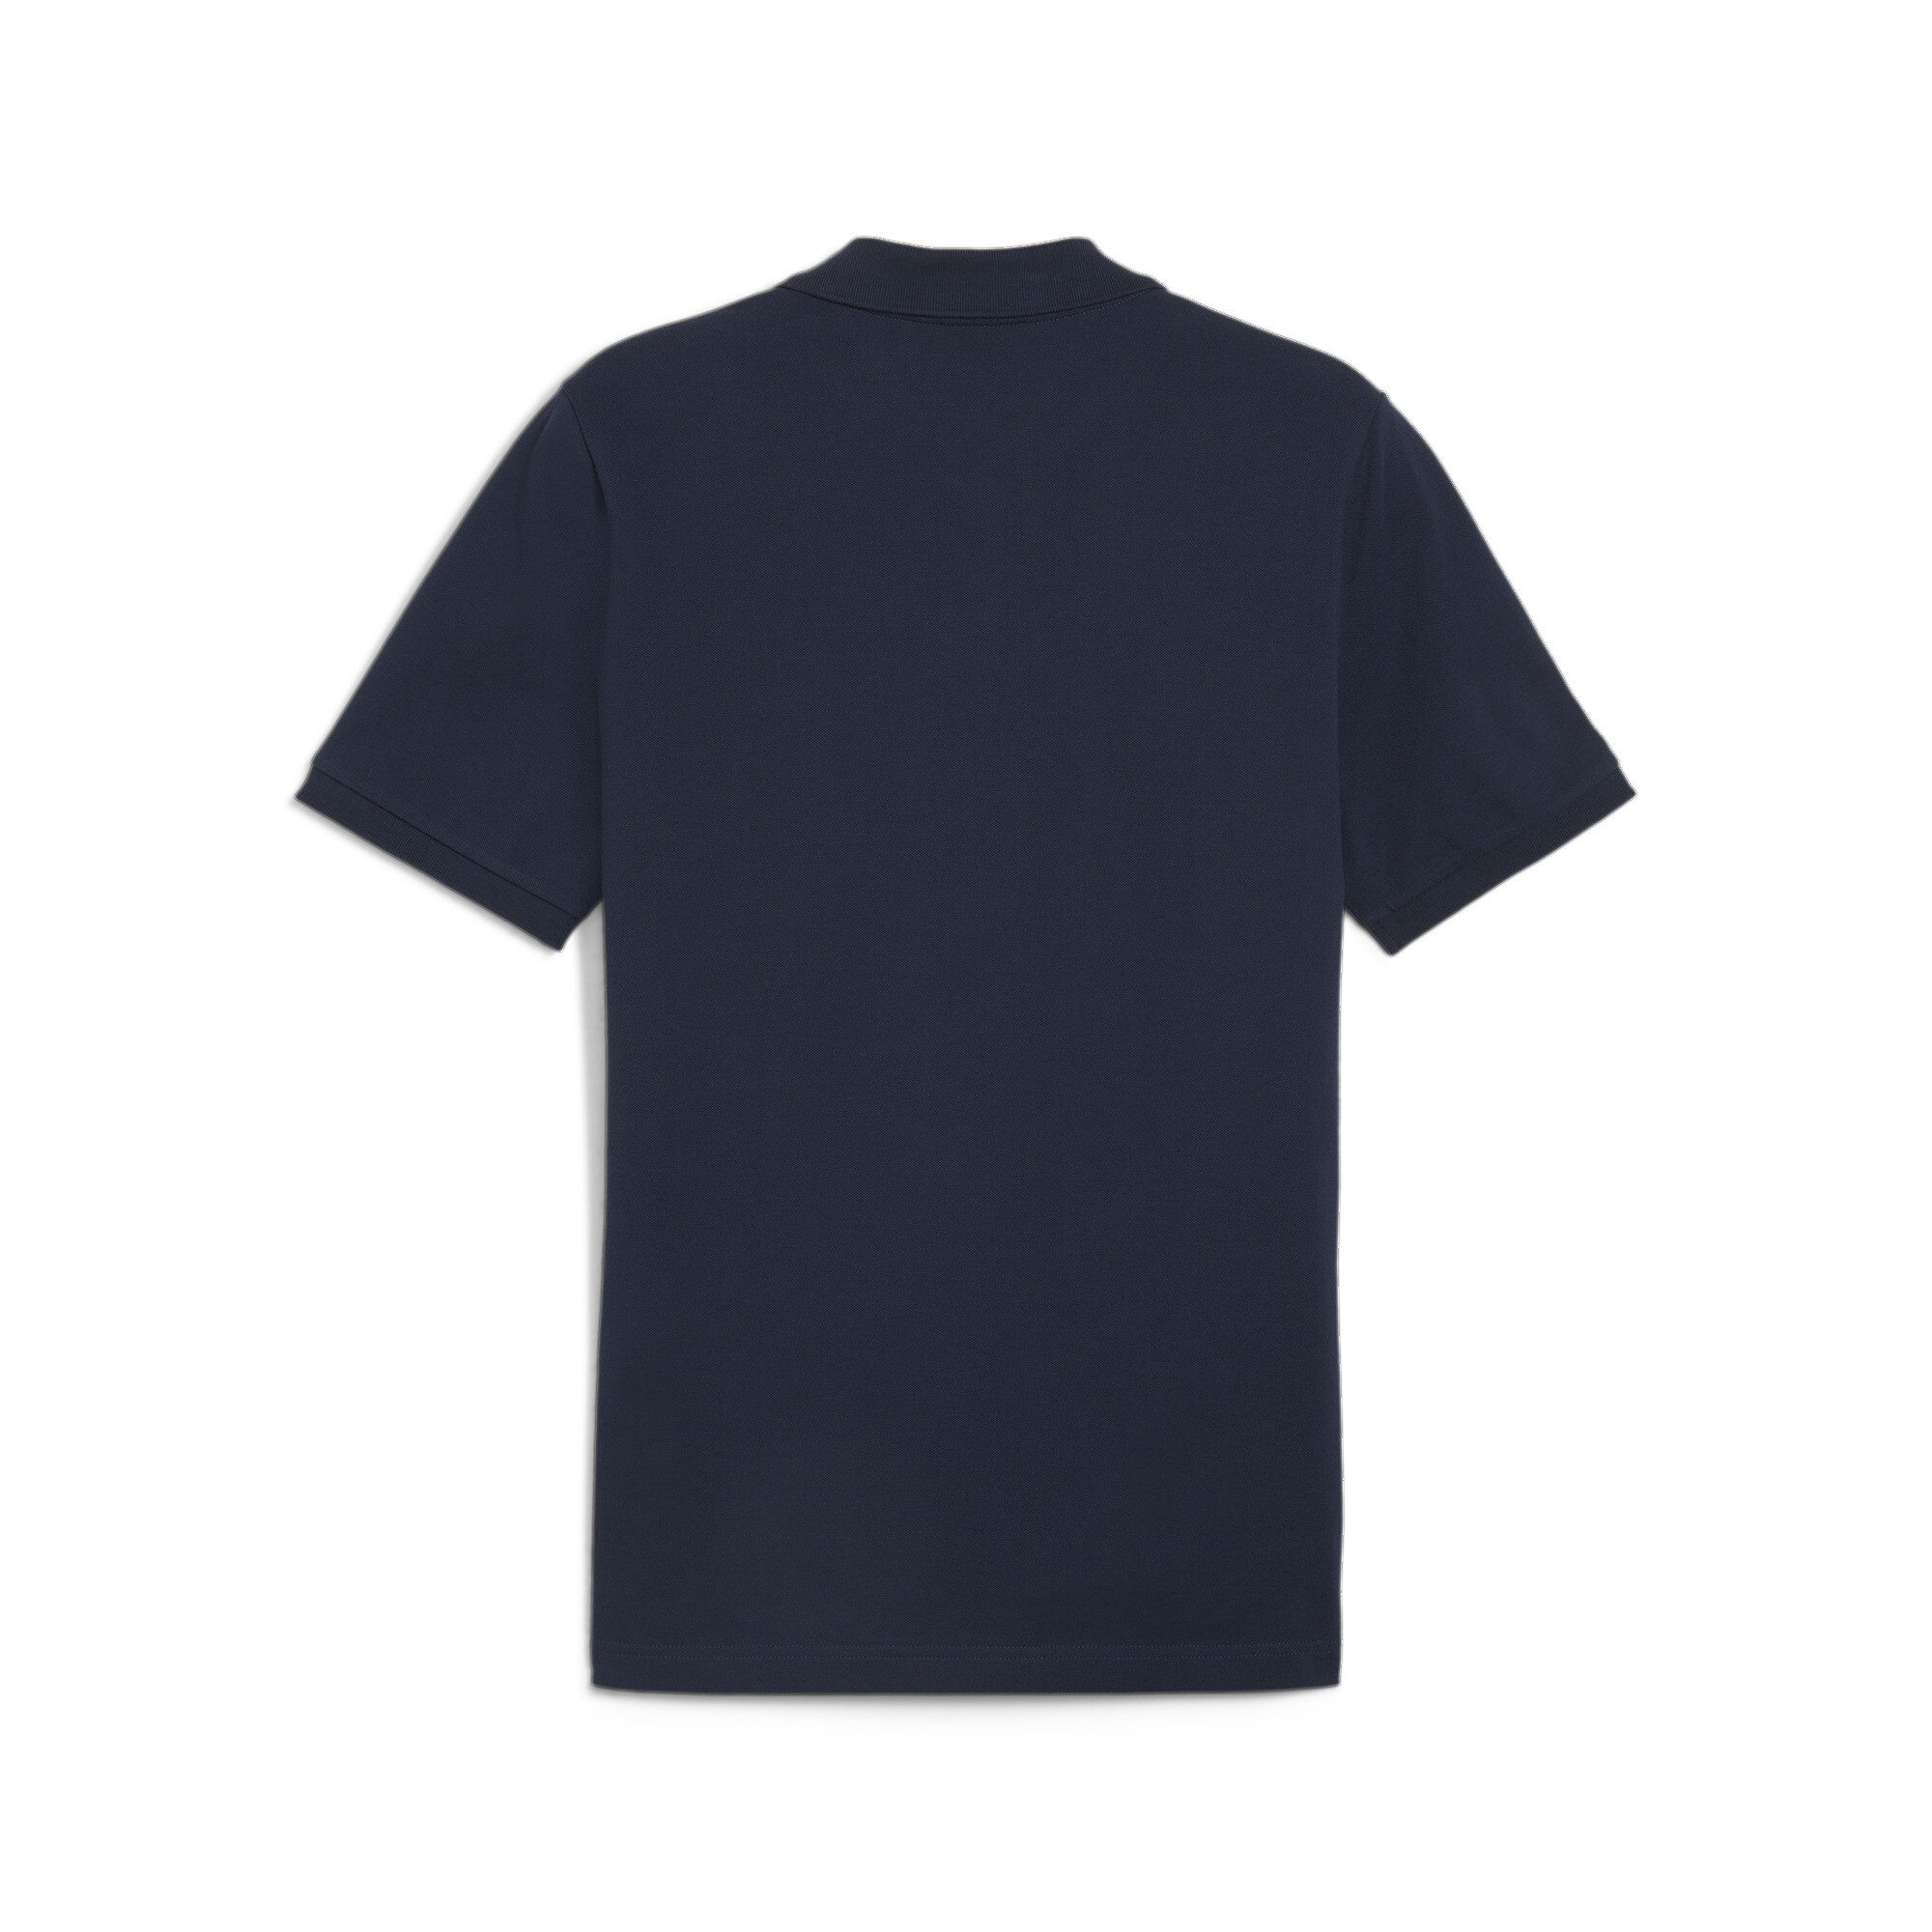 Men's Puma Classics Polo Shirt T-Shirt, Blue T-Shirt, Size XS T-Shirt, Clothing